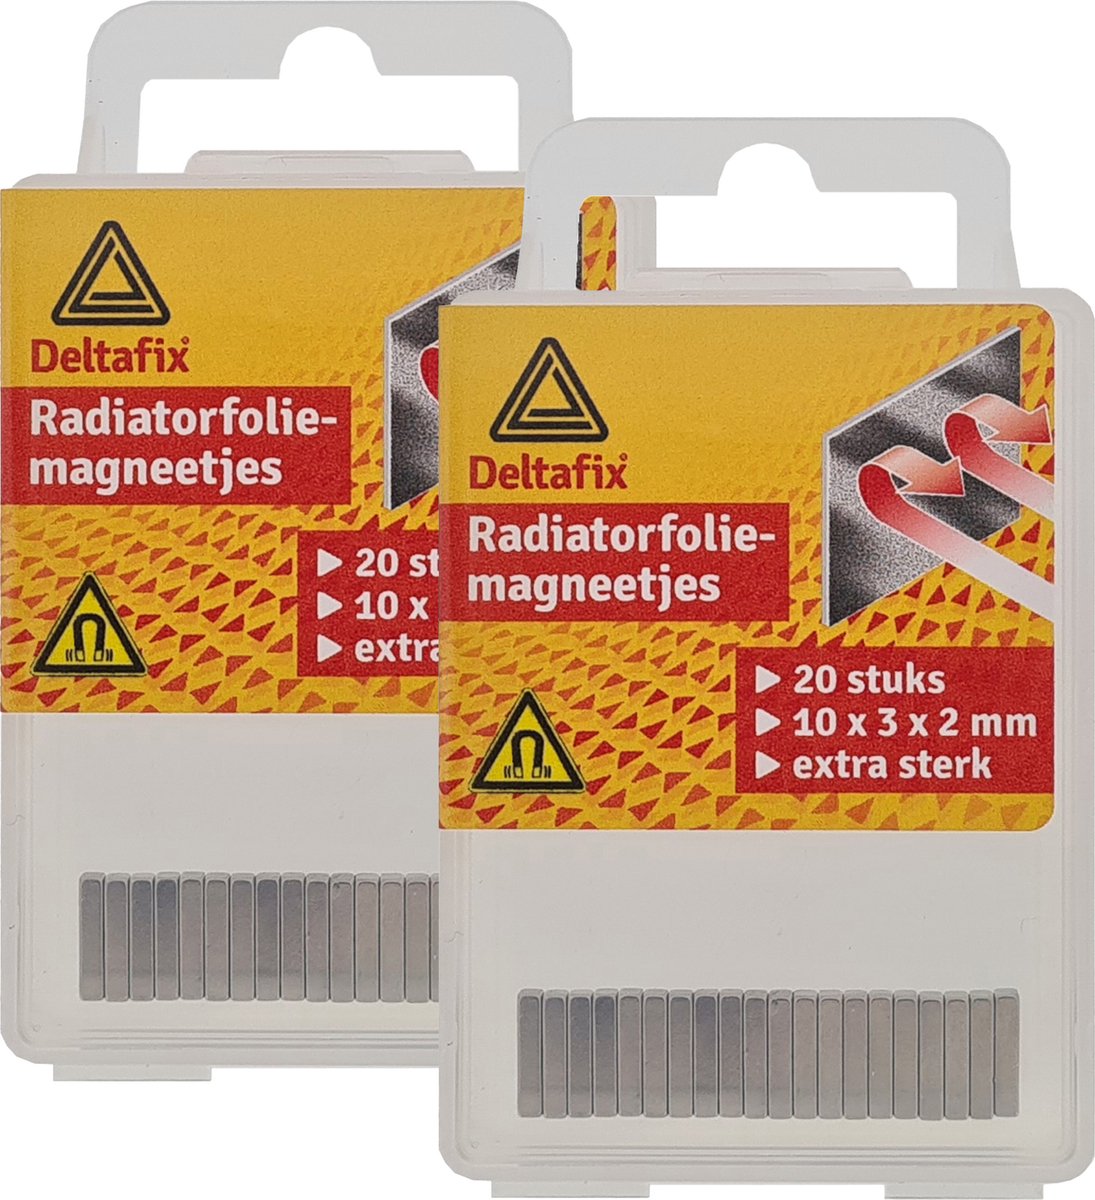 Deltafix Radiatorfolie magneten 40x - nikkel - hittebestendig - 10 x 3 x 2 mm